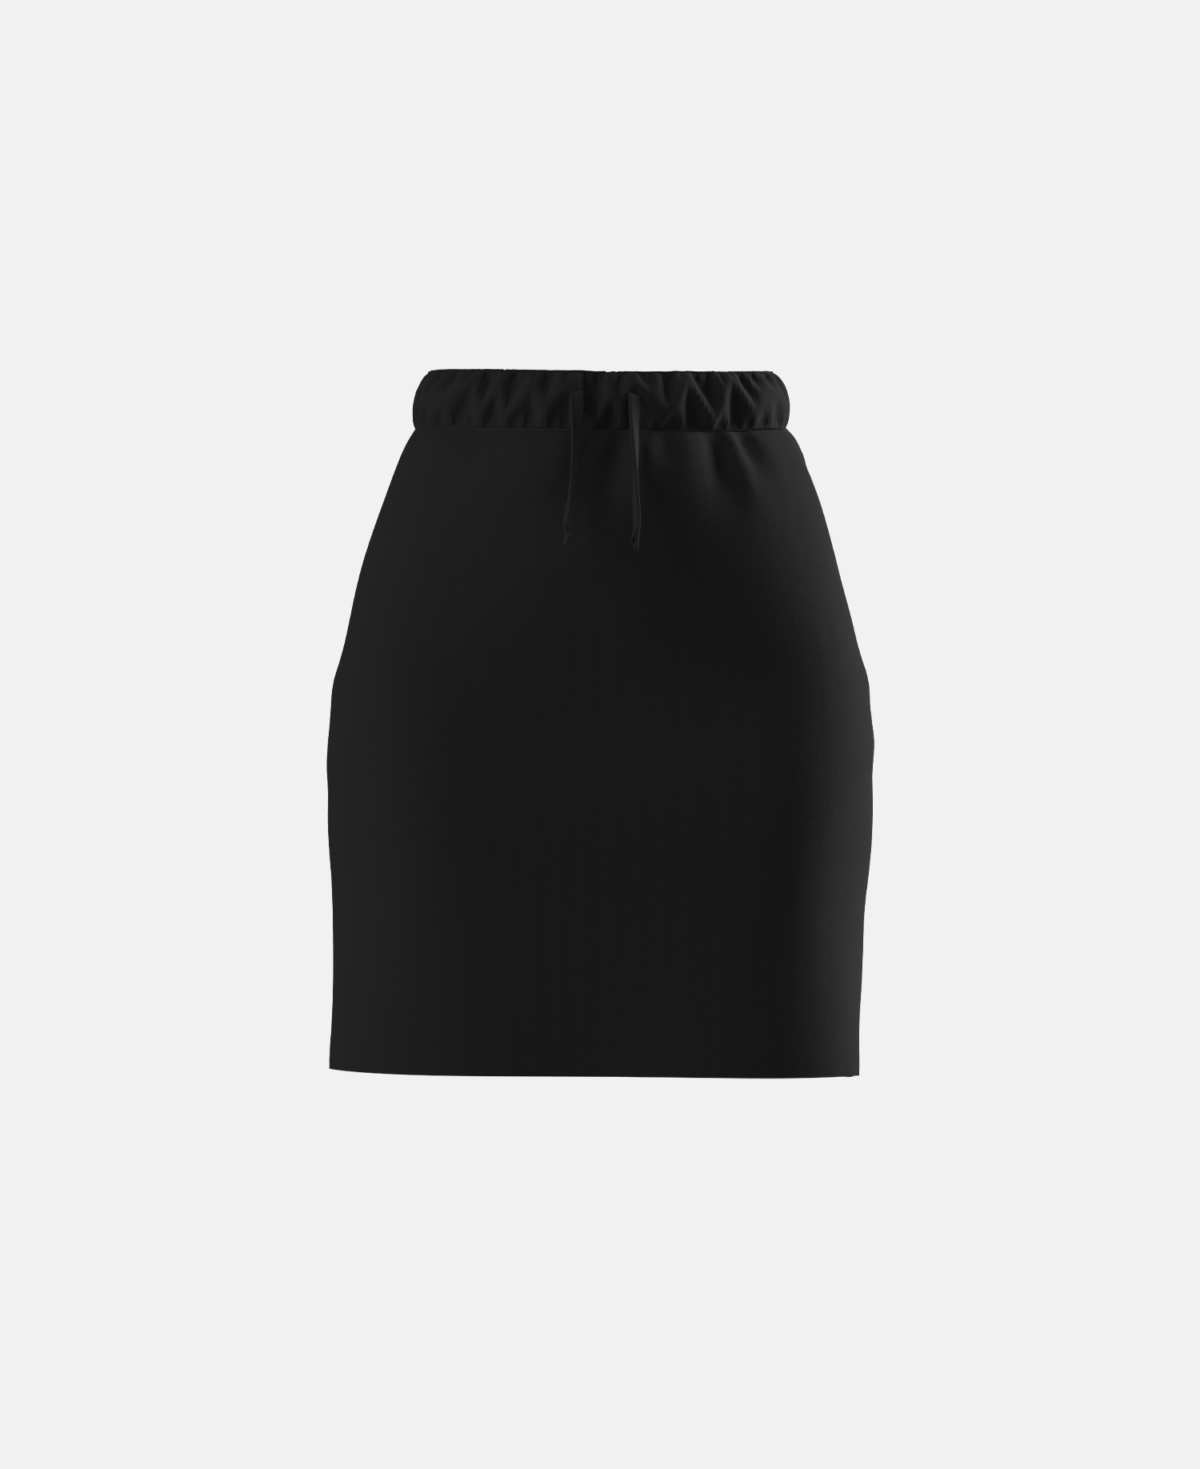 Marseille Women's Skirt